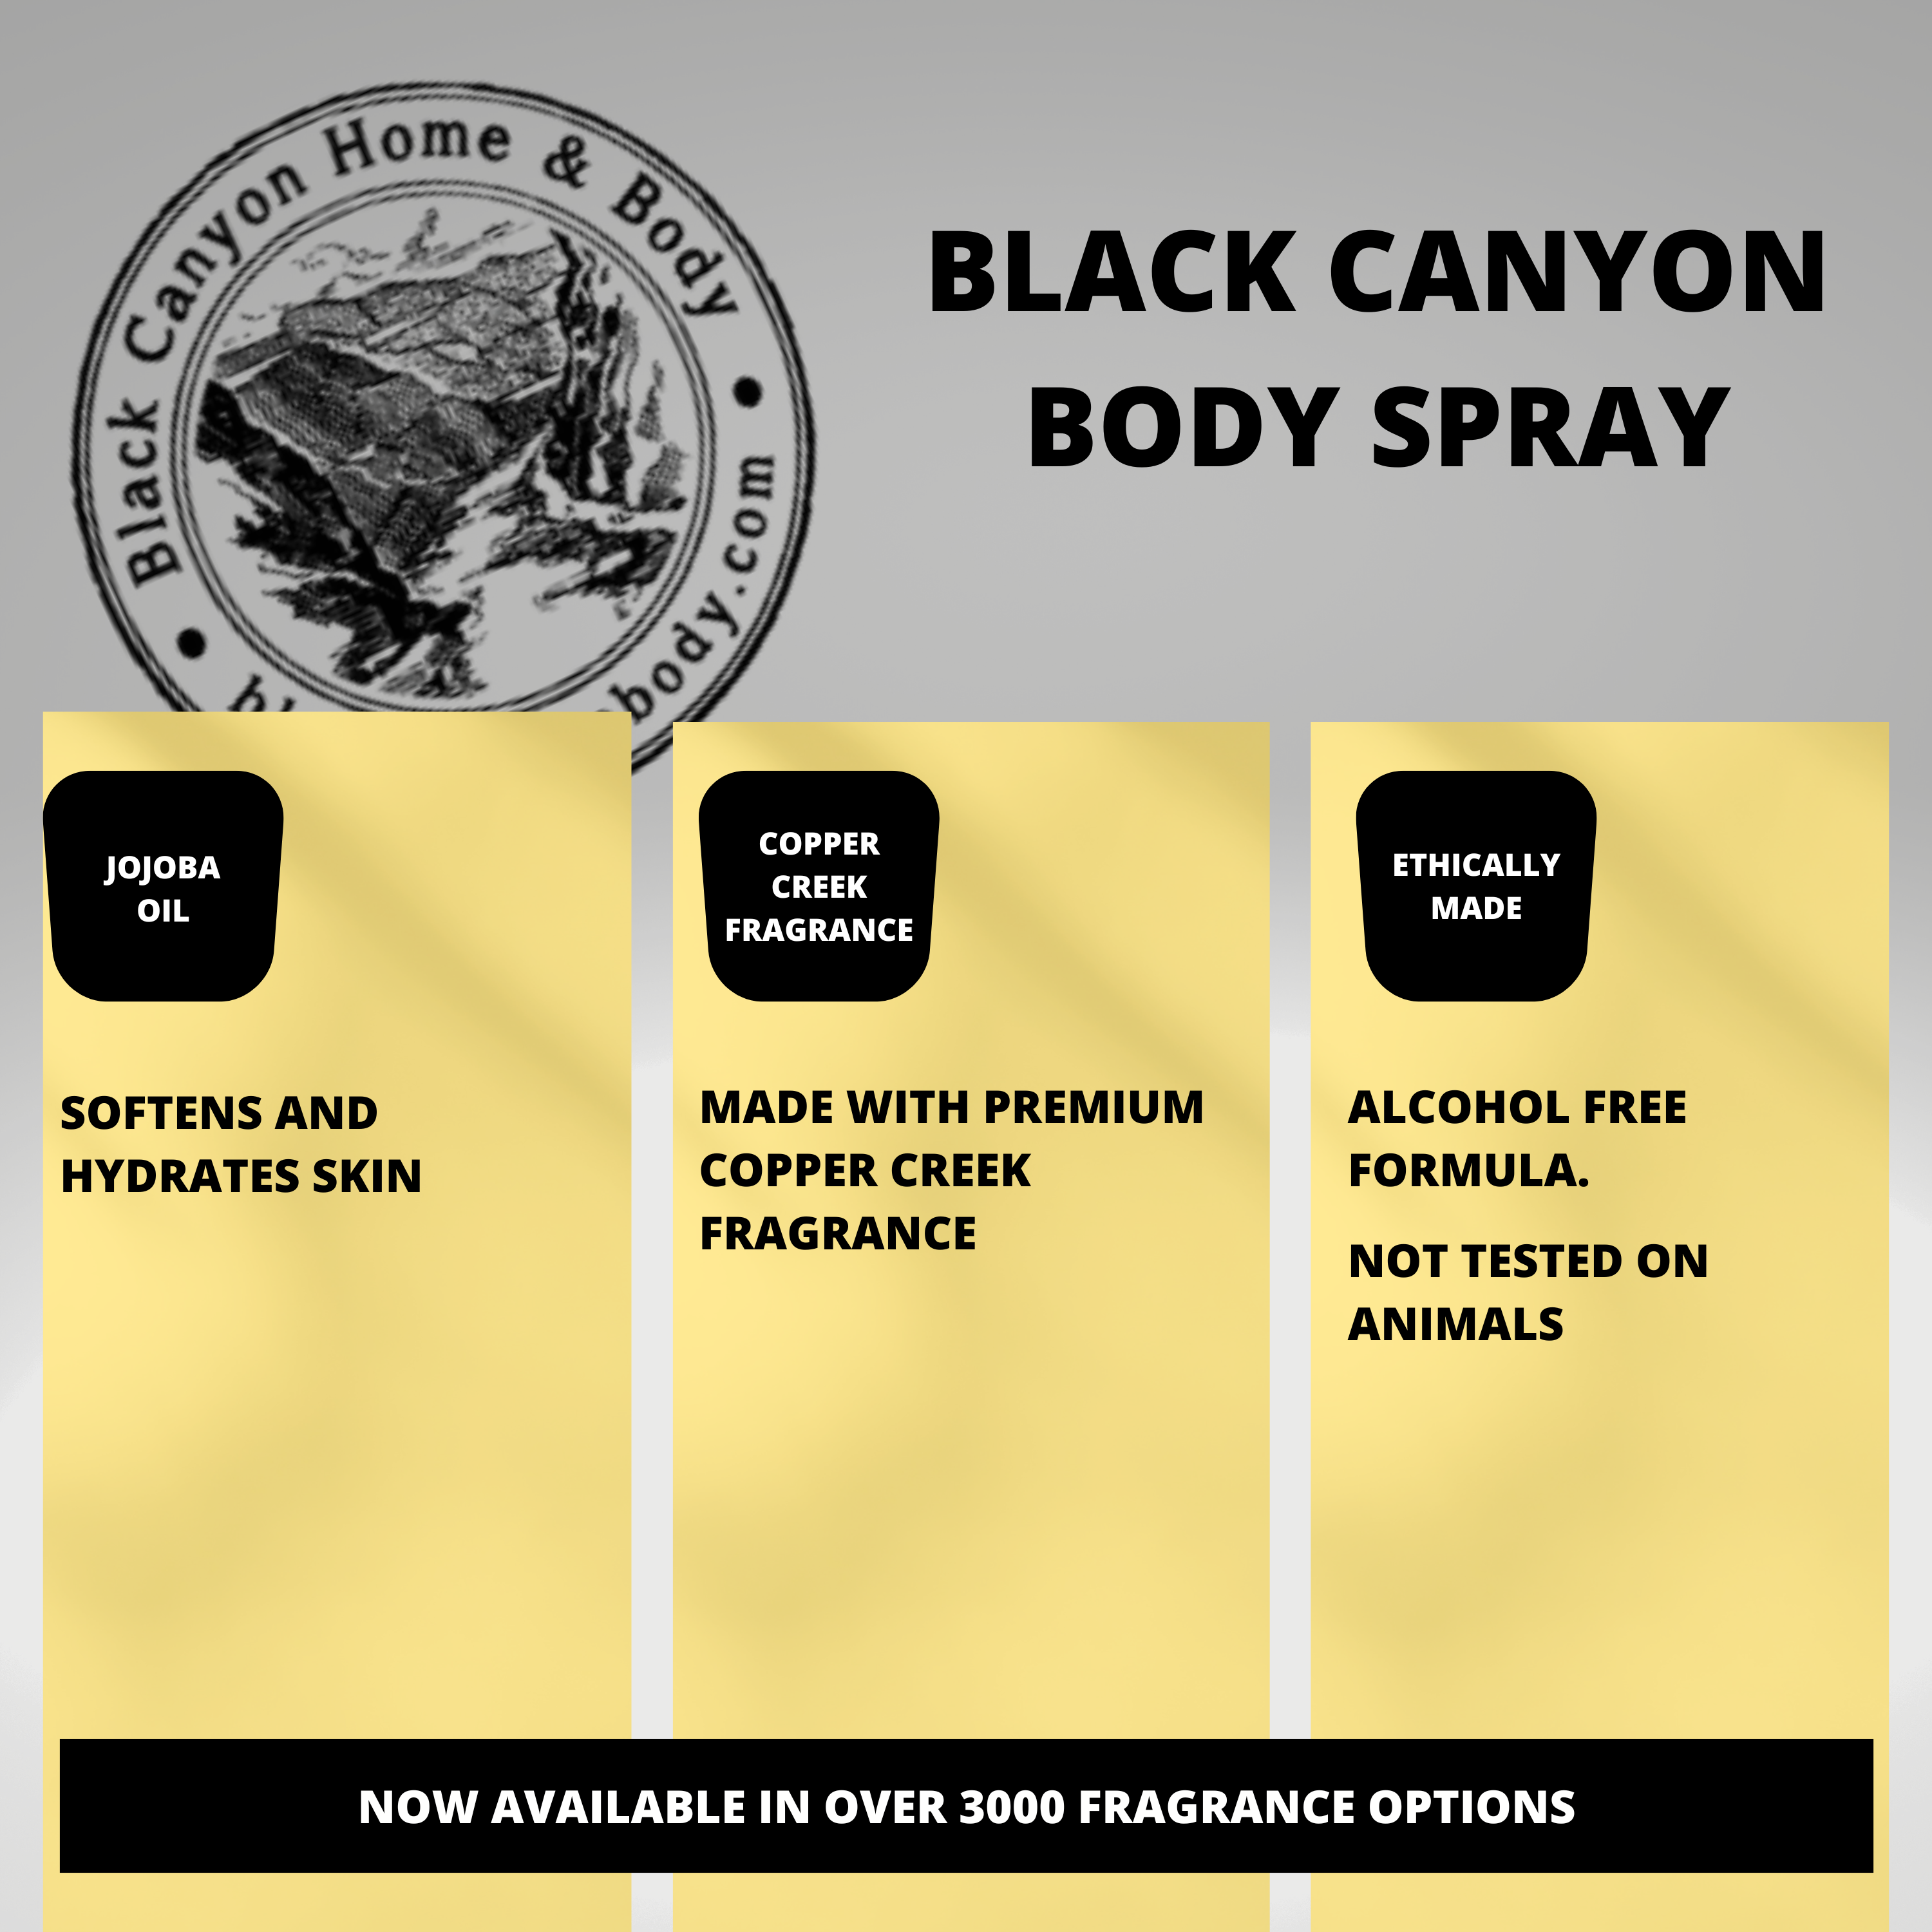 Black Canyon Cucumber & Cantaloupe Scented Body Spray